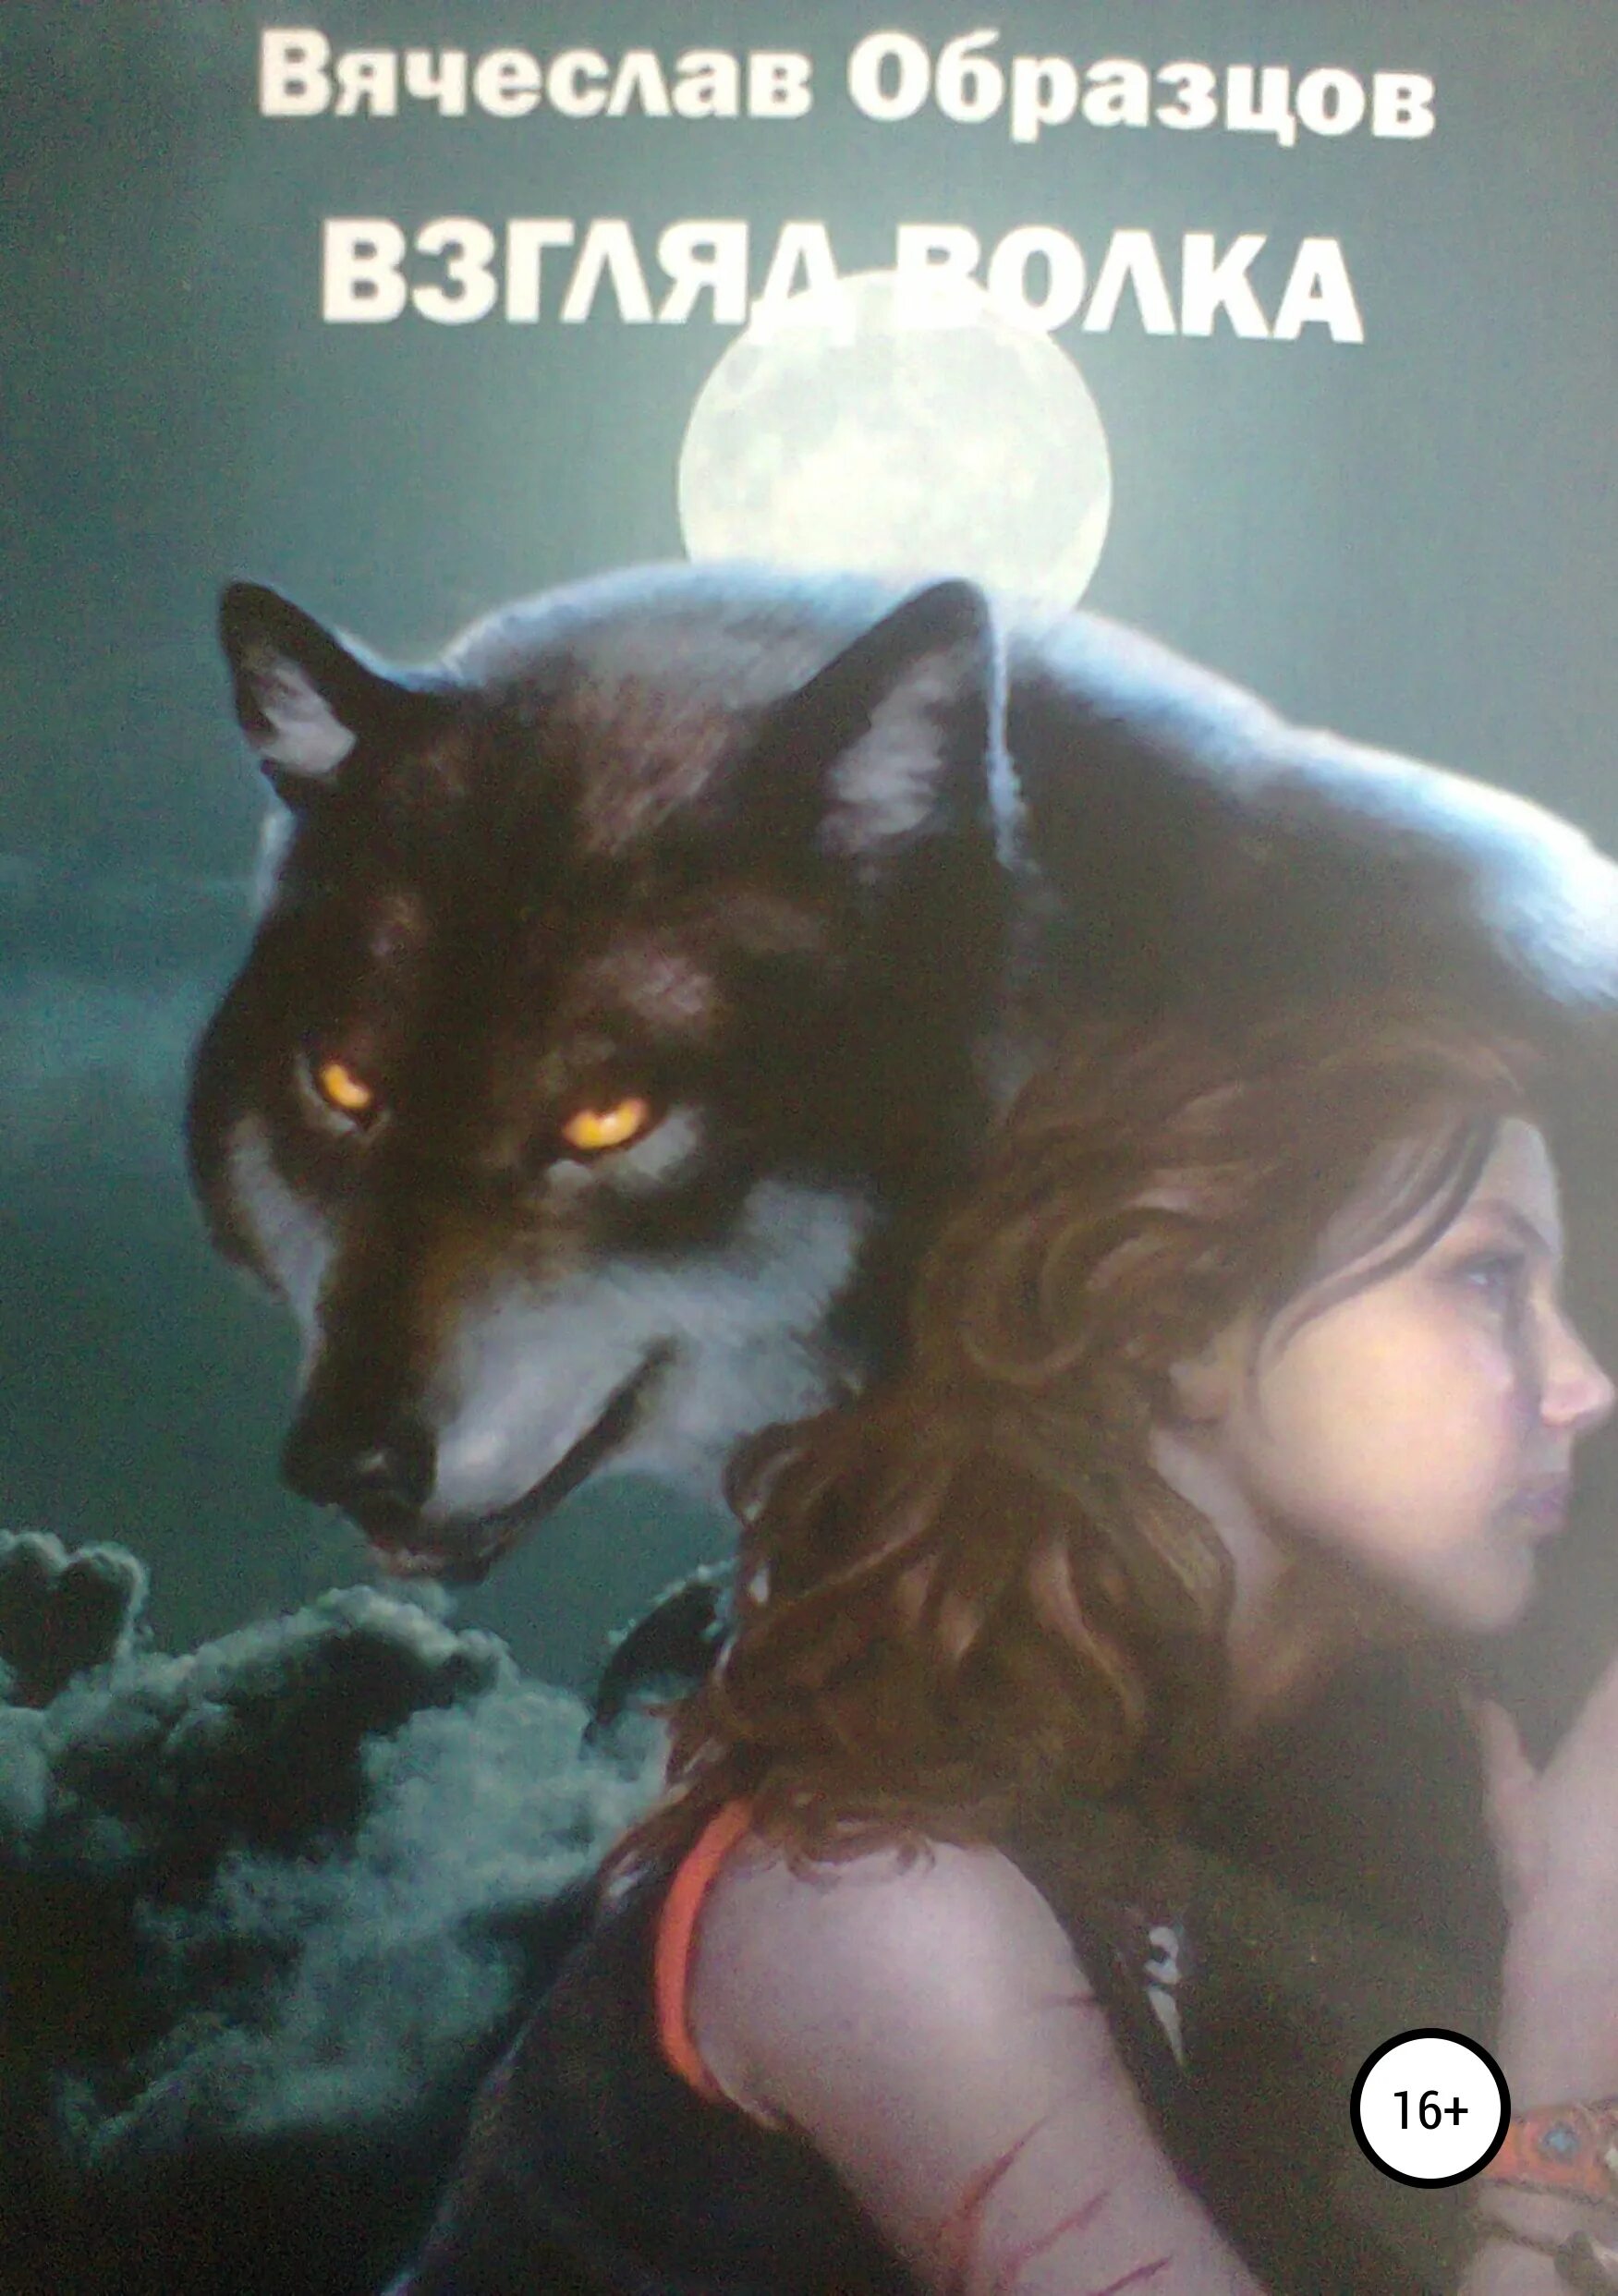 Читать книги про волков. Книги про Волков. Книга волк. Книга взгляд волка.